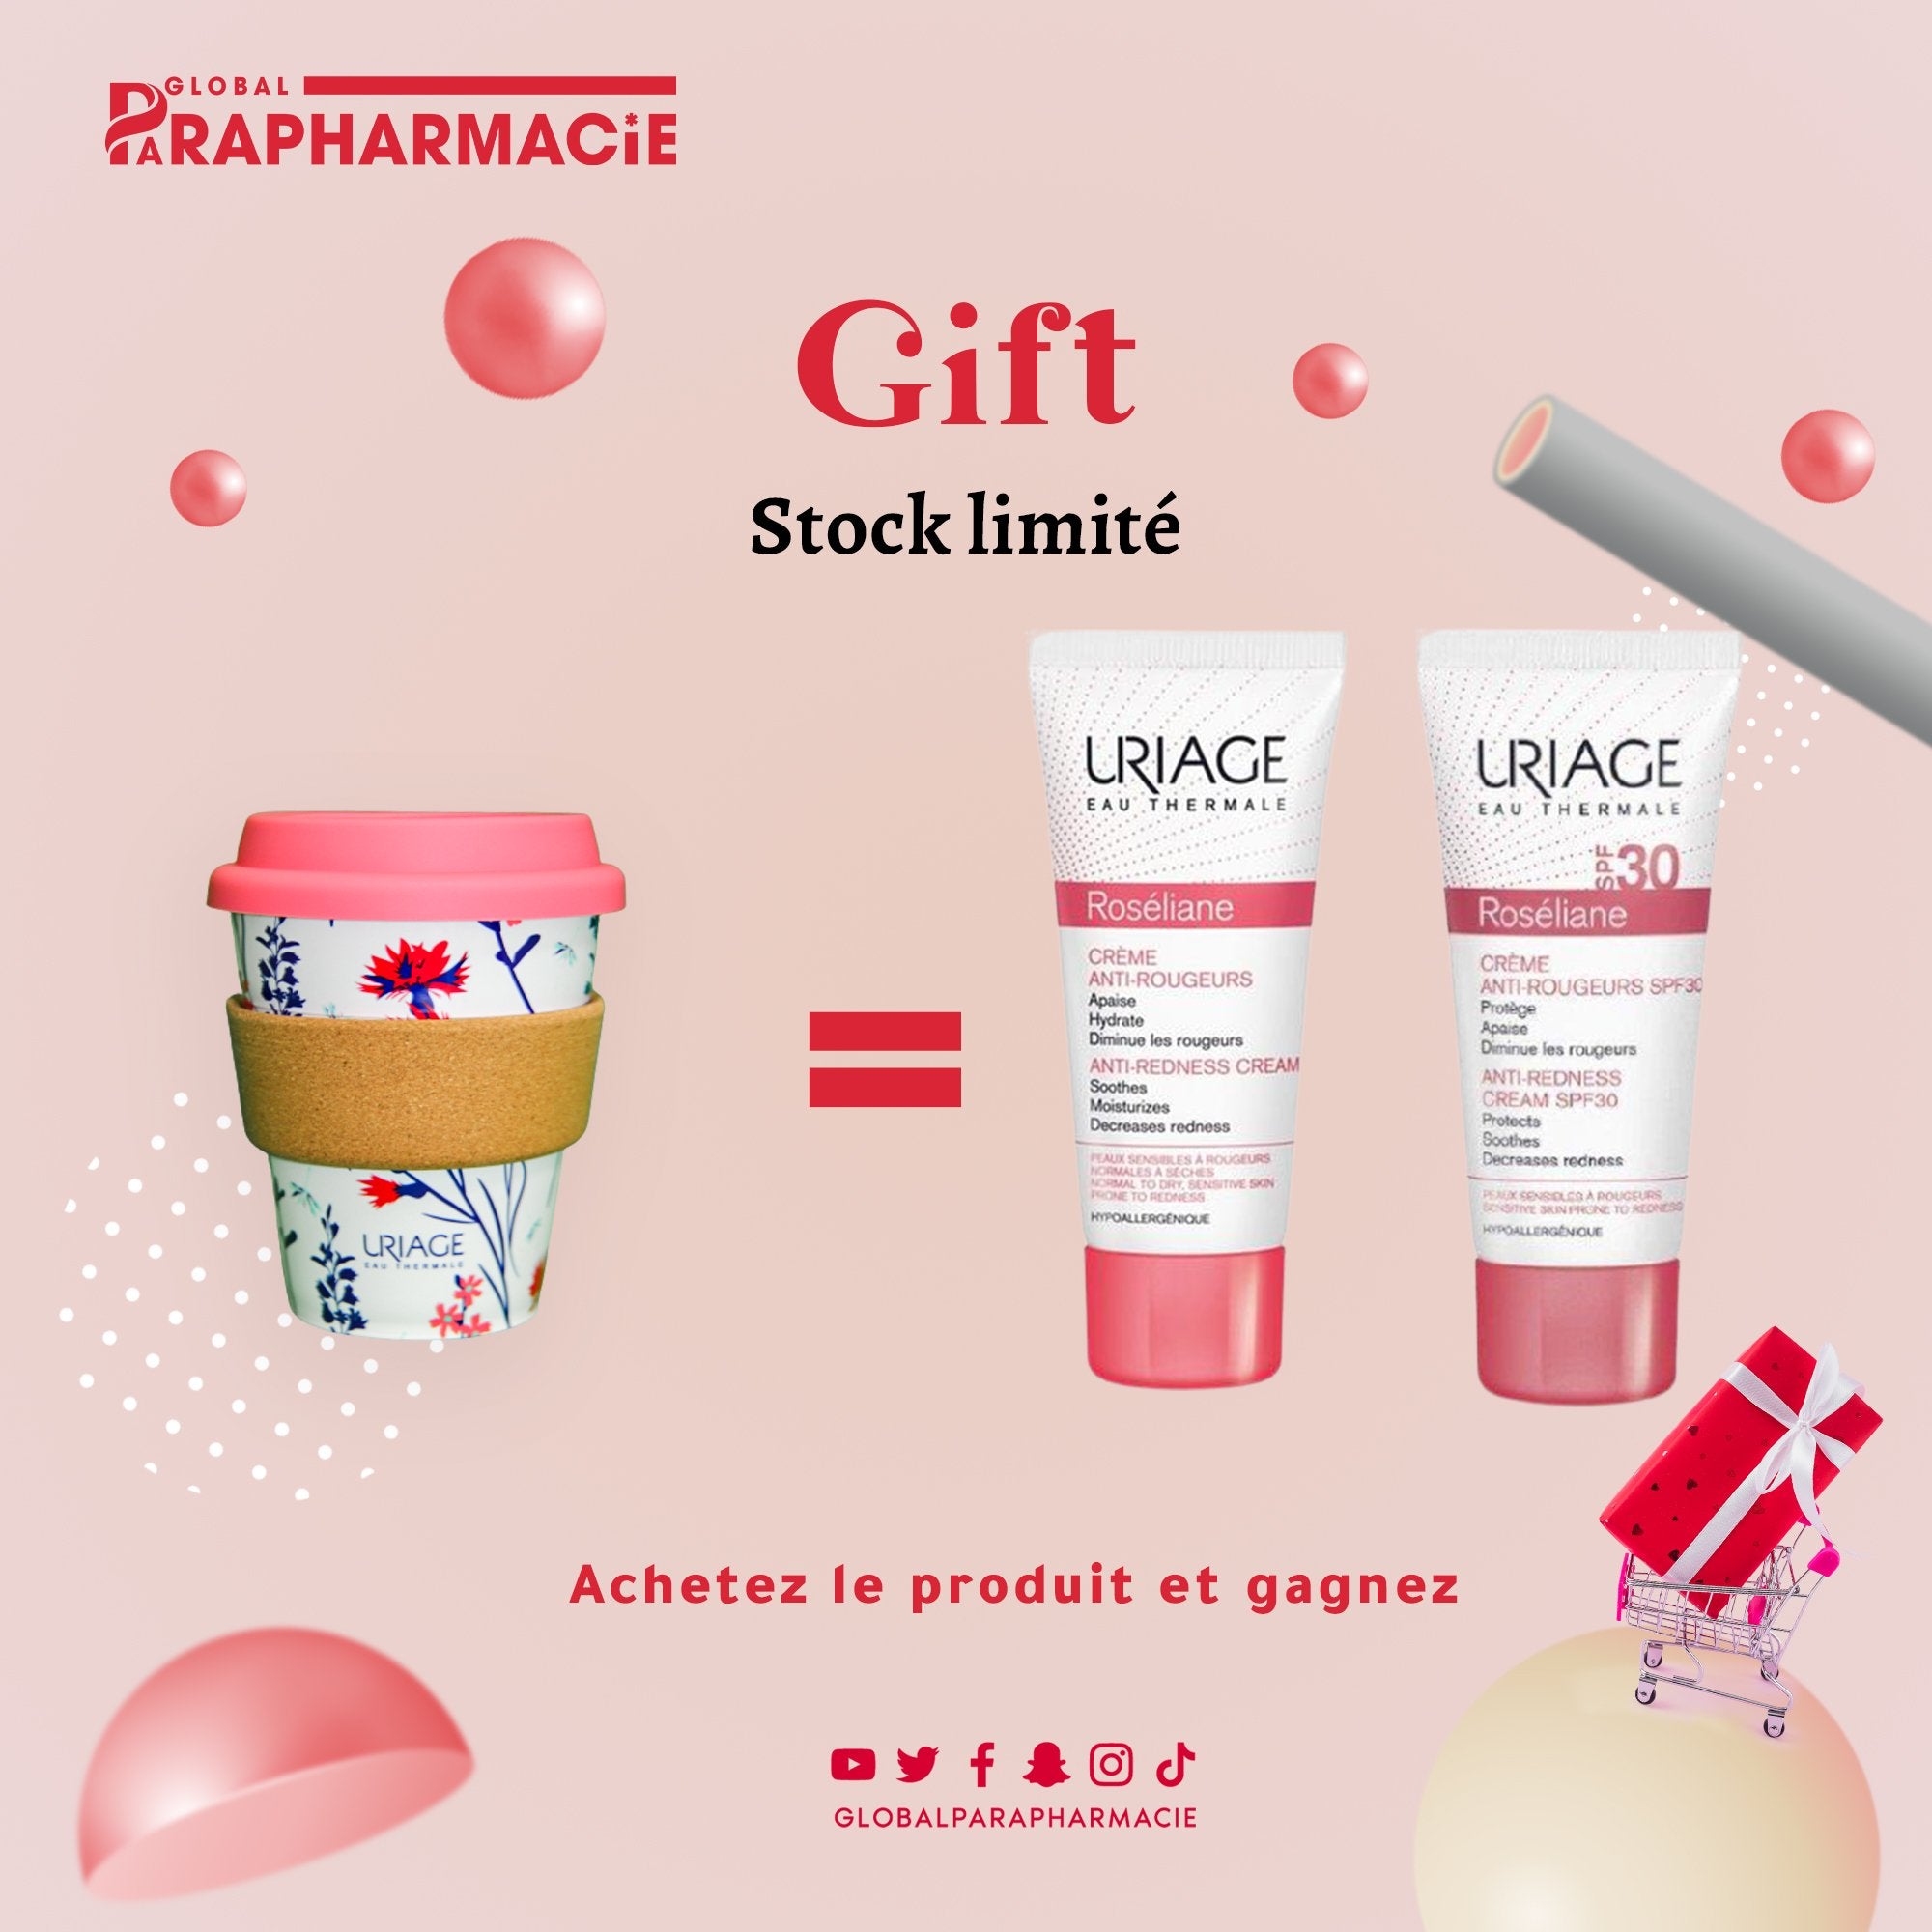 Uriage Roséliane Crème Anti-Rougeurs 40ml +  Uriage roséliane crème anti-rougeurs SPF30 40ml Promo Gift Offert